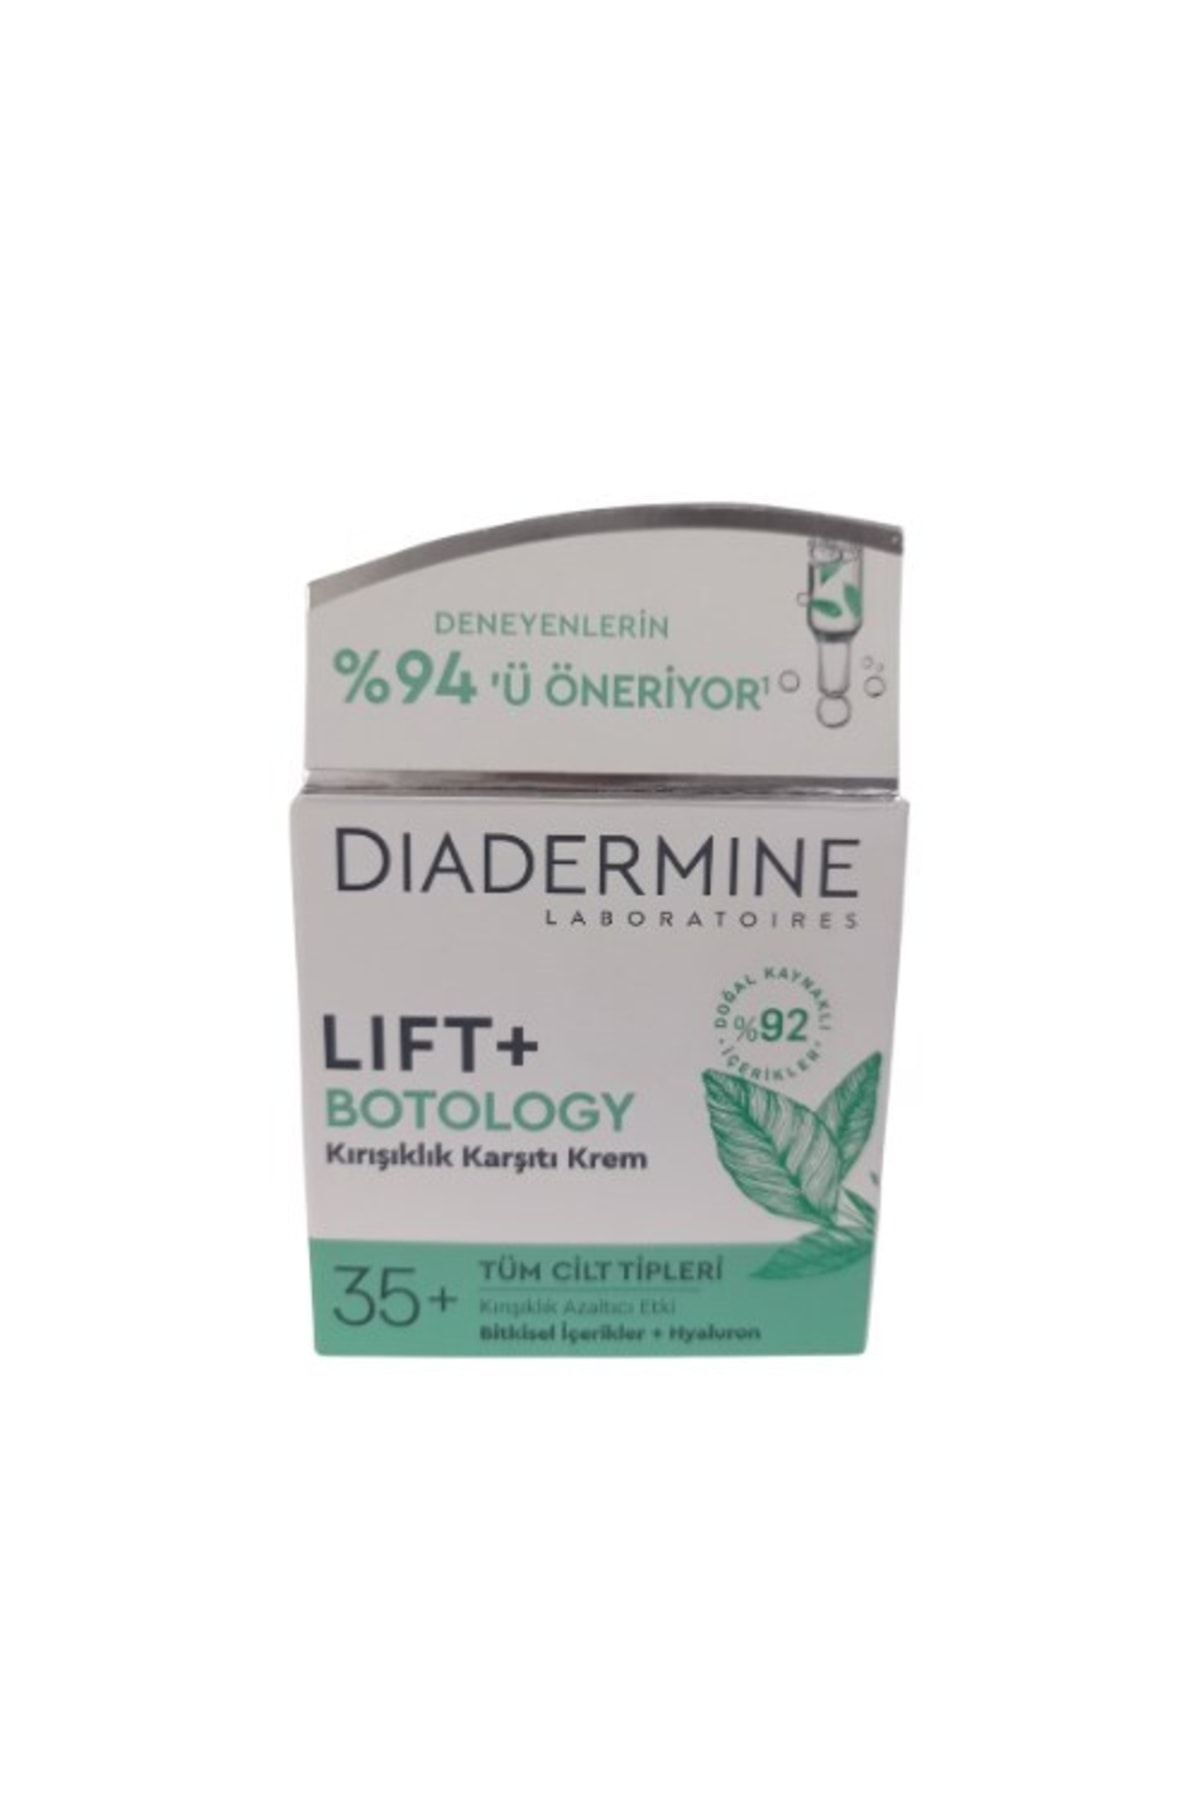 Diadermine Lift+ Botology Kırışıklık Karşıtı Krem 50 Ml